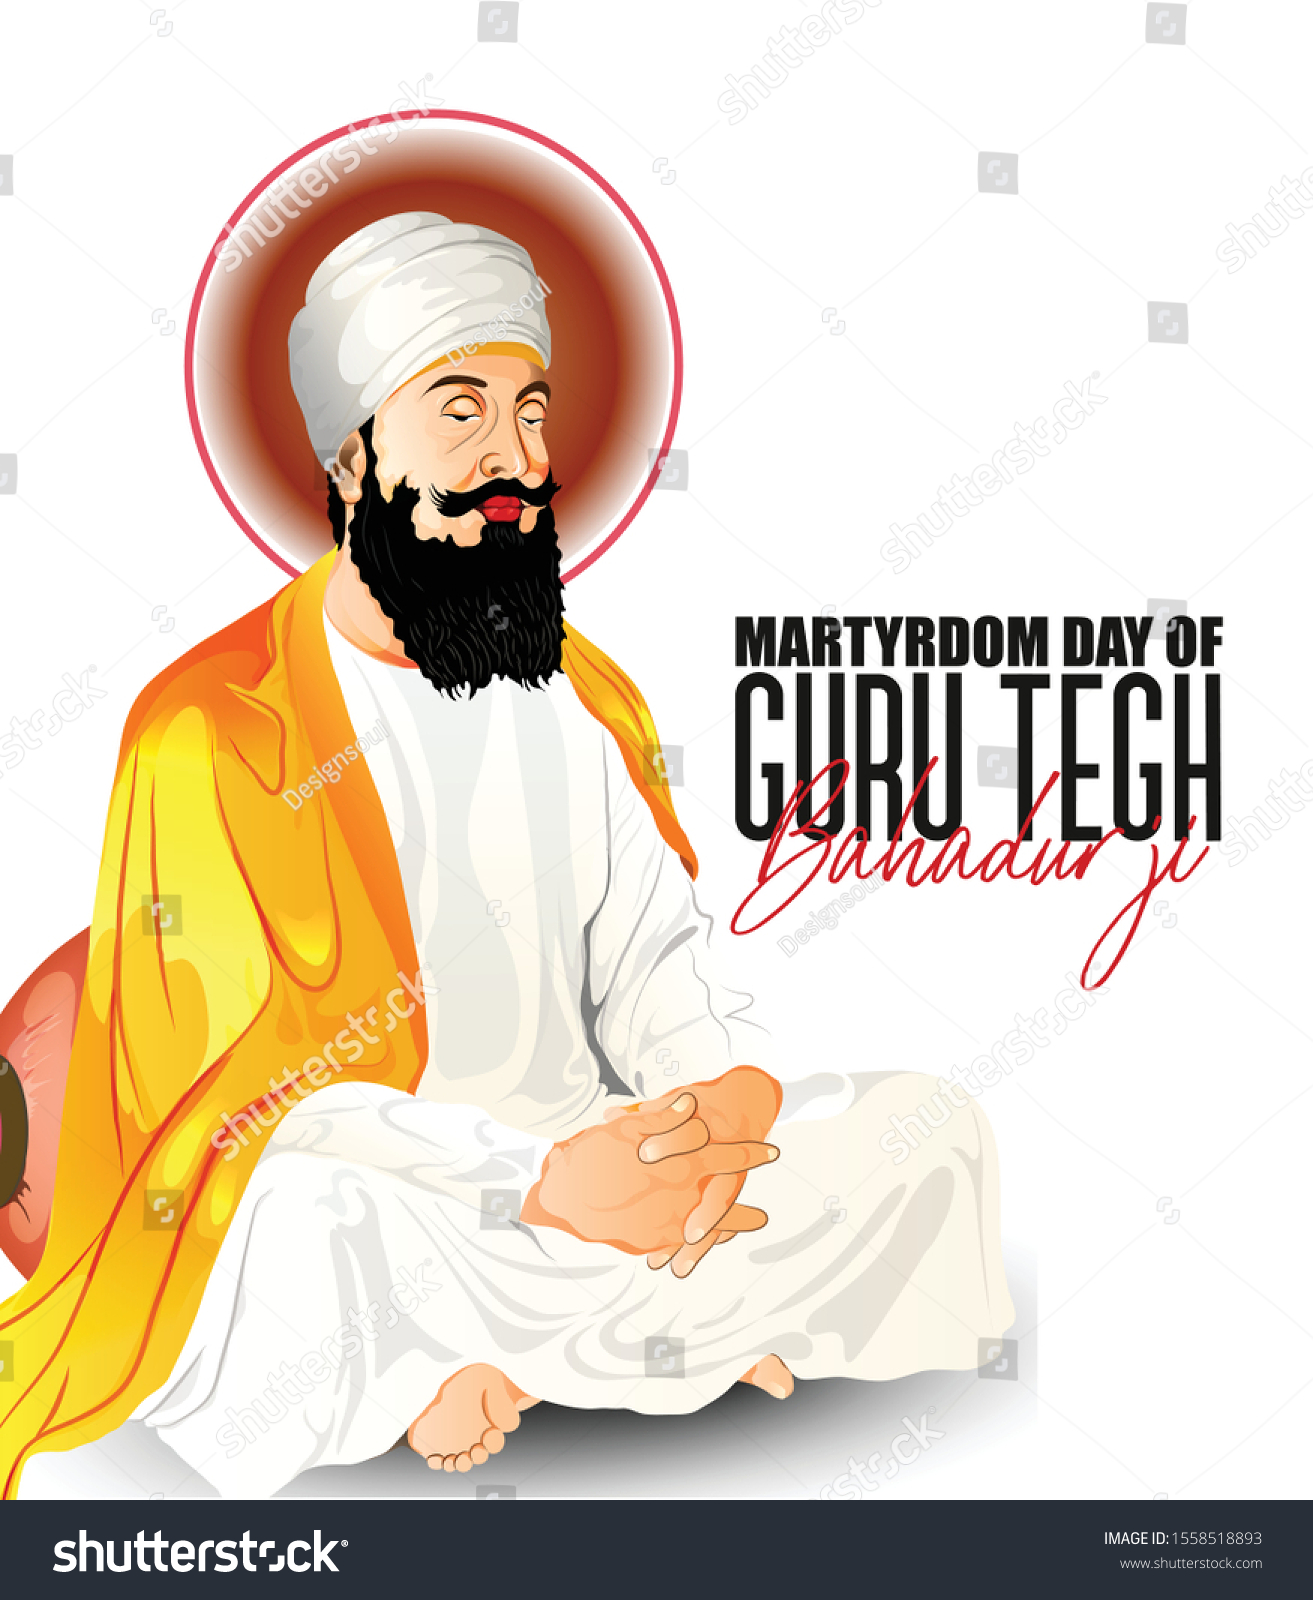 illustration of Martyrdom Day of Guru Tegh Bahadur Sahib